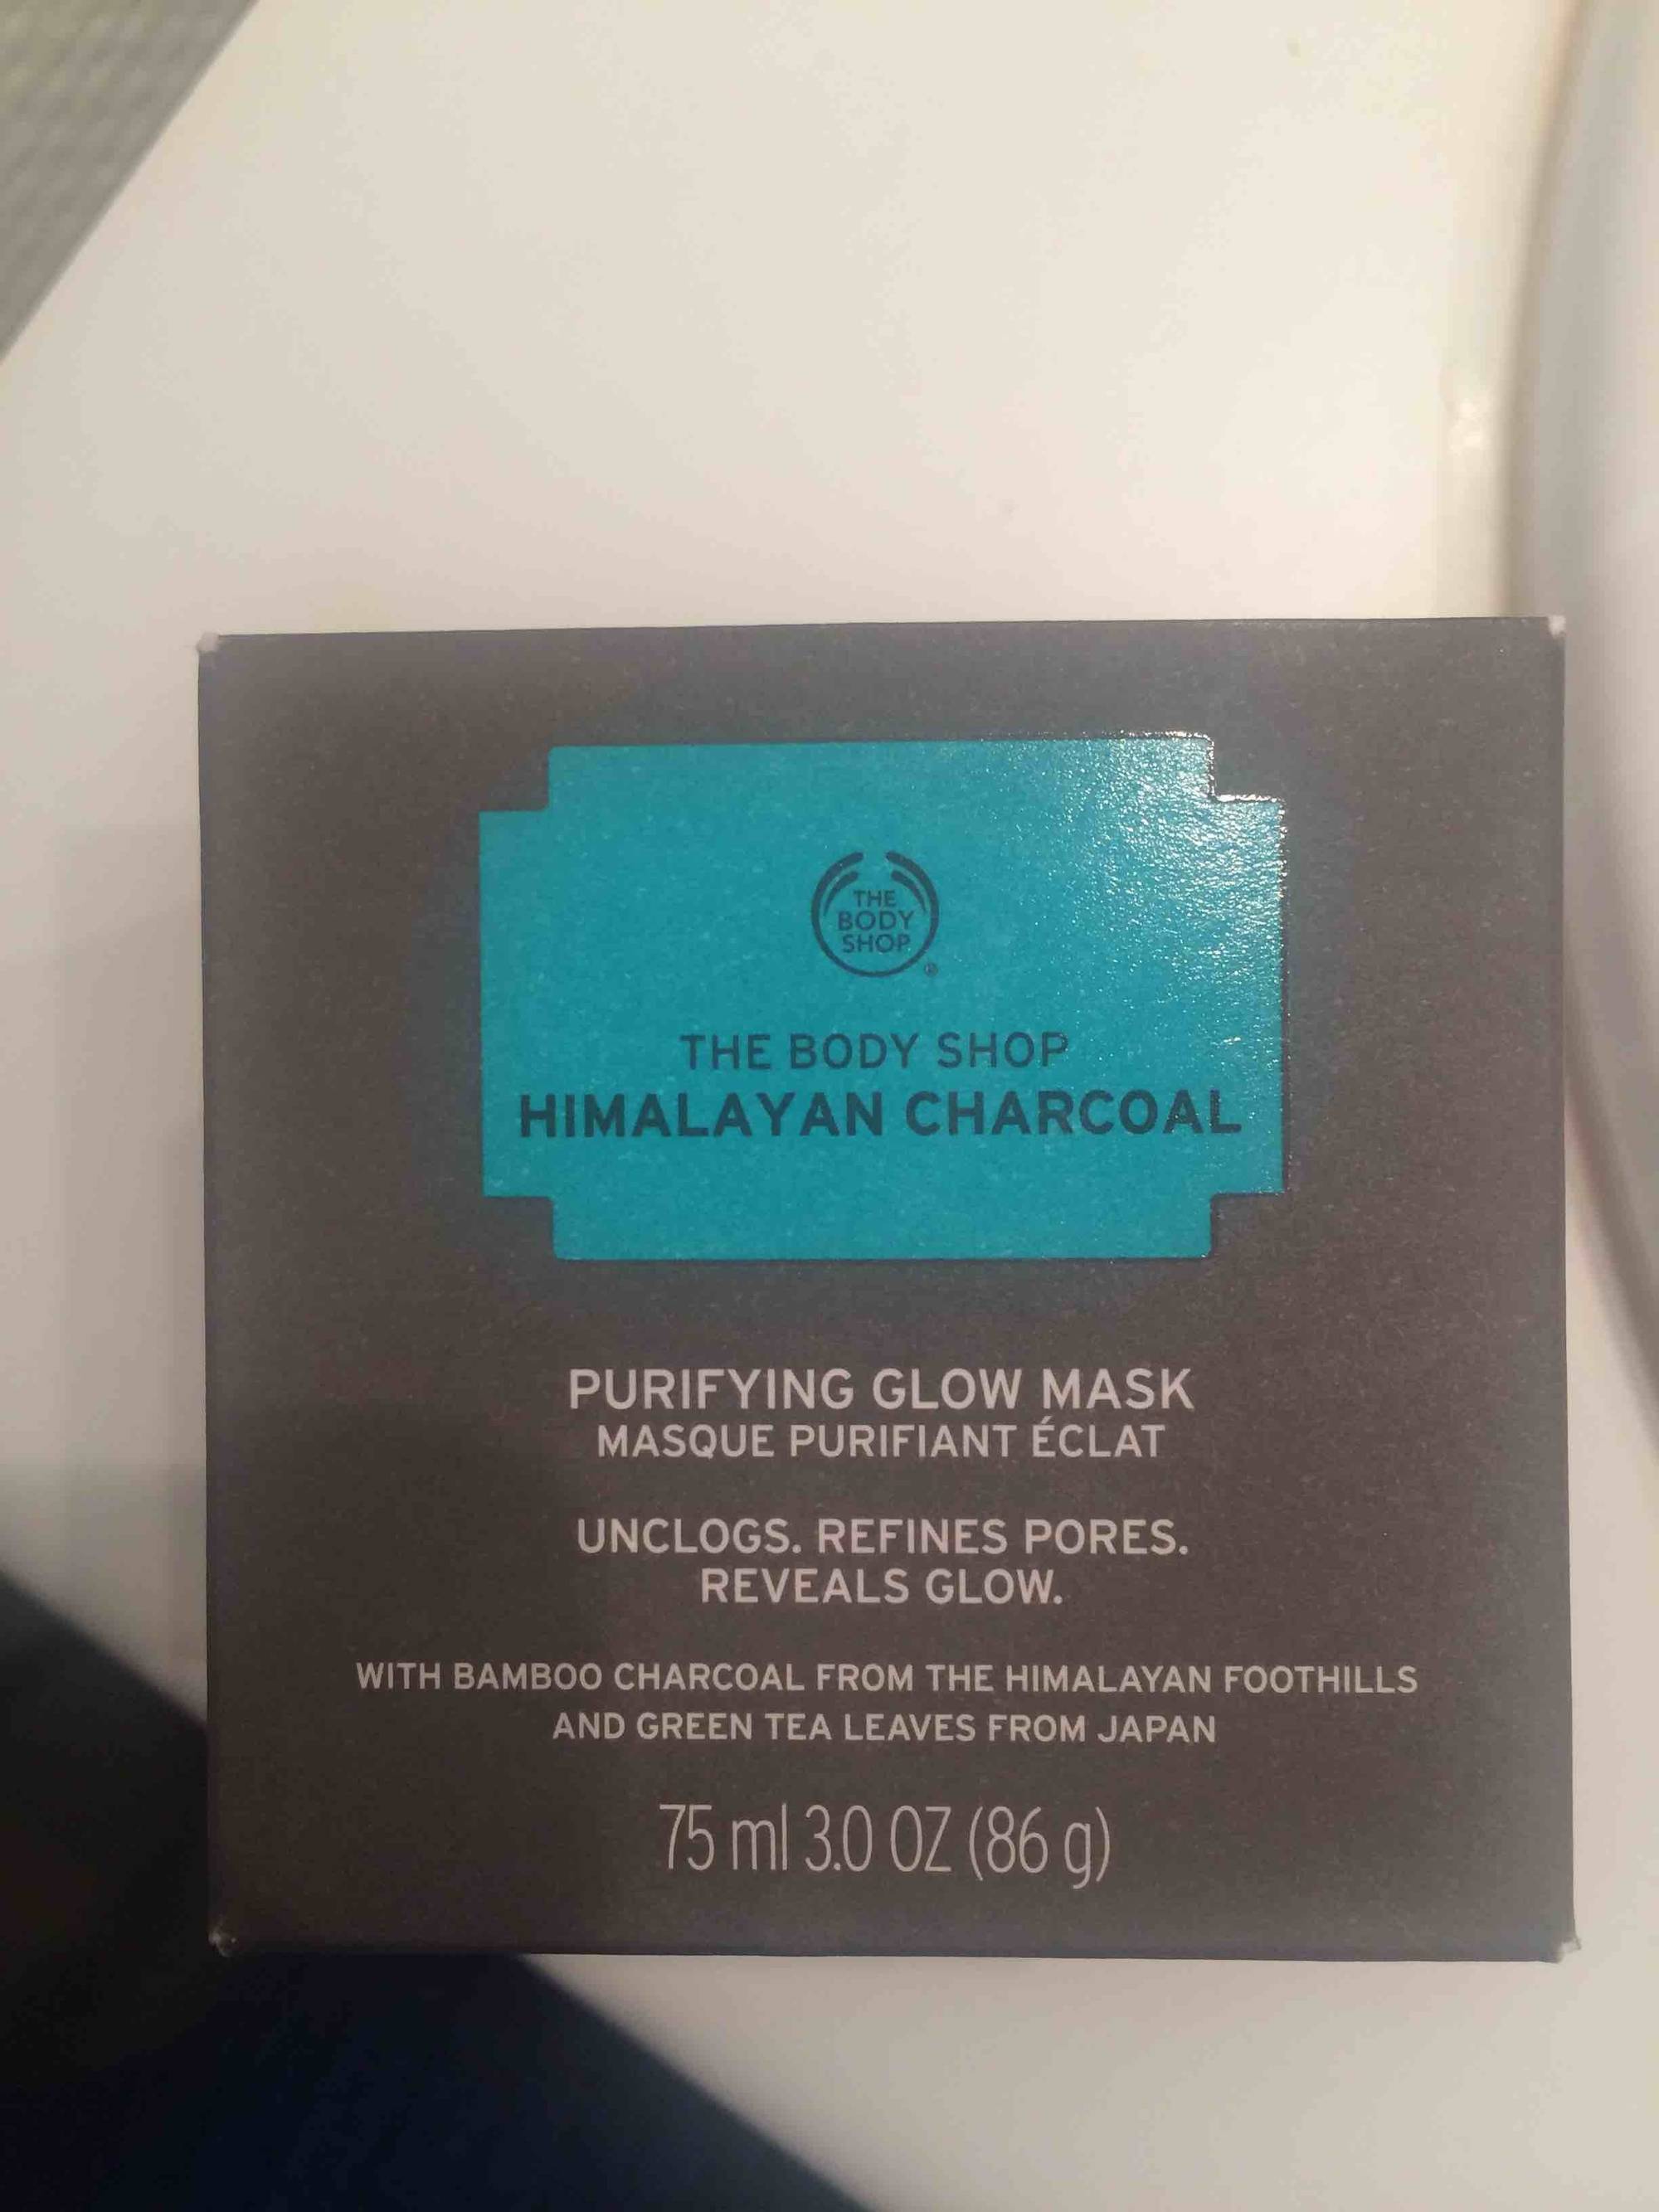 THE BODY SHOP - Himalayan charcoal - Masque purifiant éclat